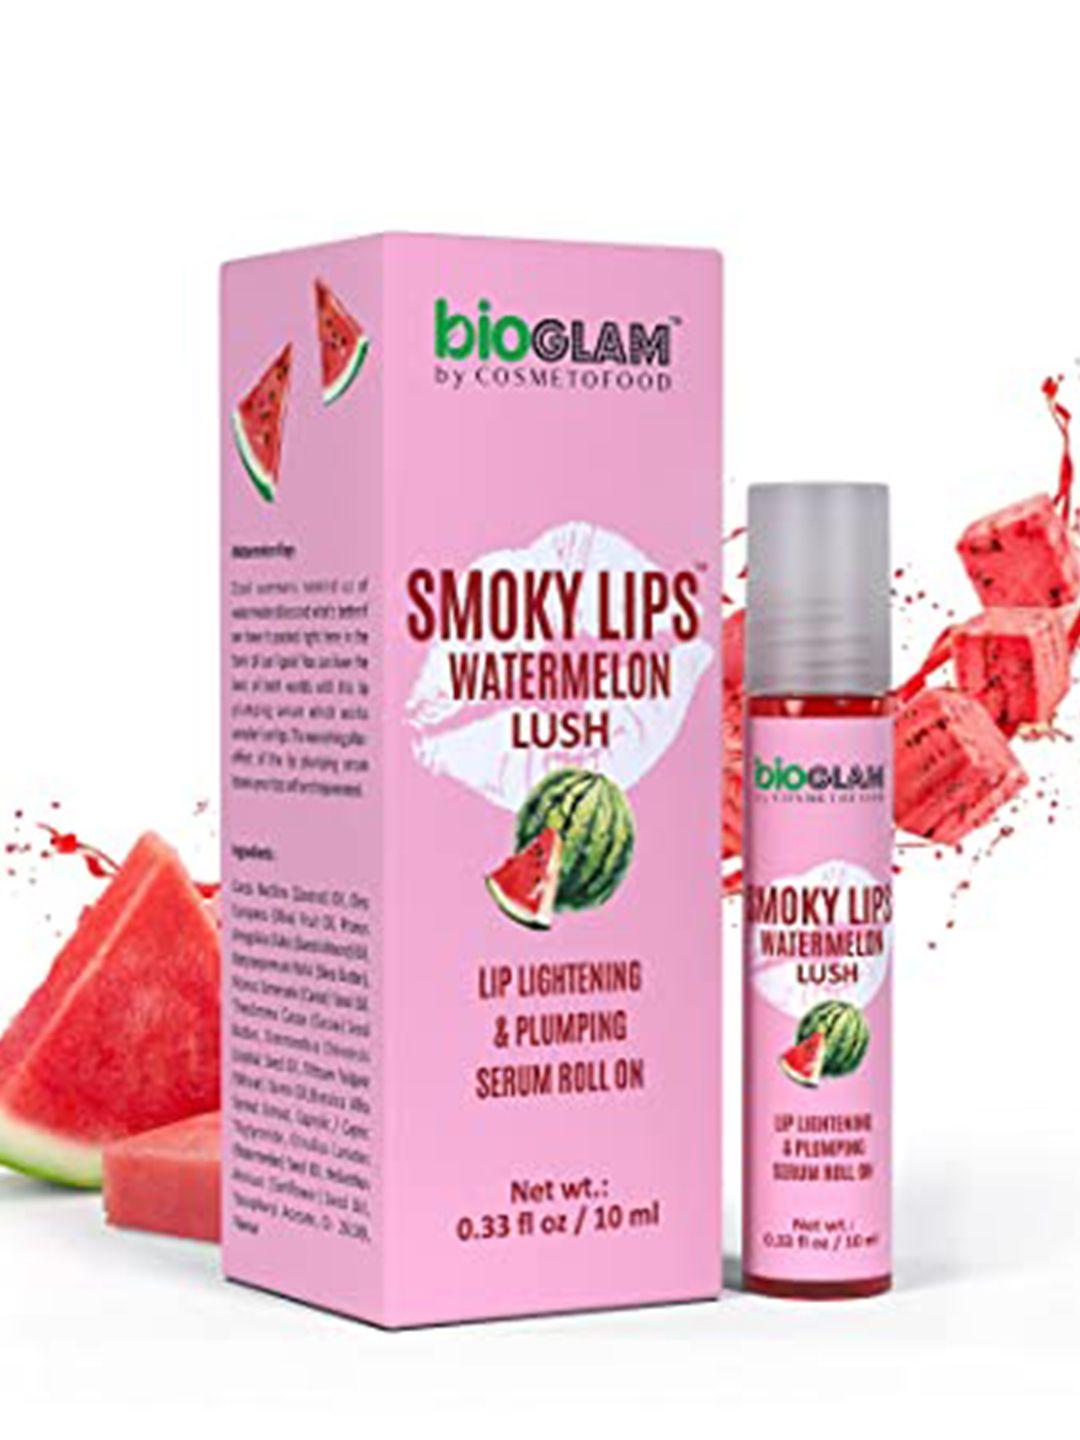 cosmetofood bioglam smoky lips watermelon lush lip lightening & plumping serum 10 ml